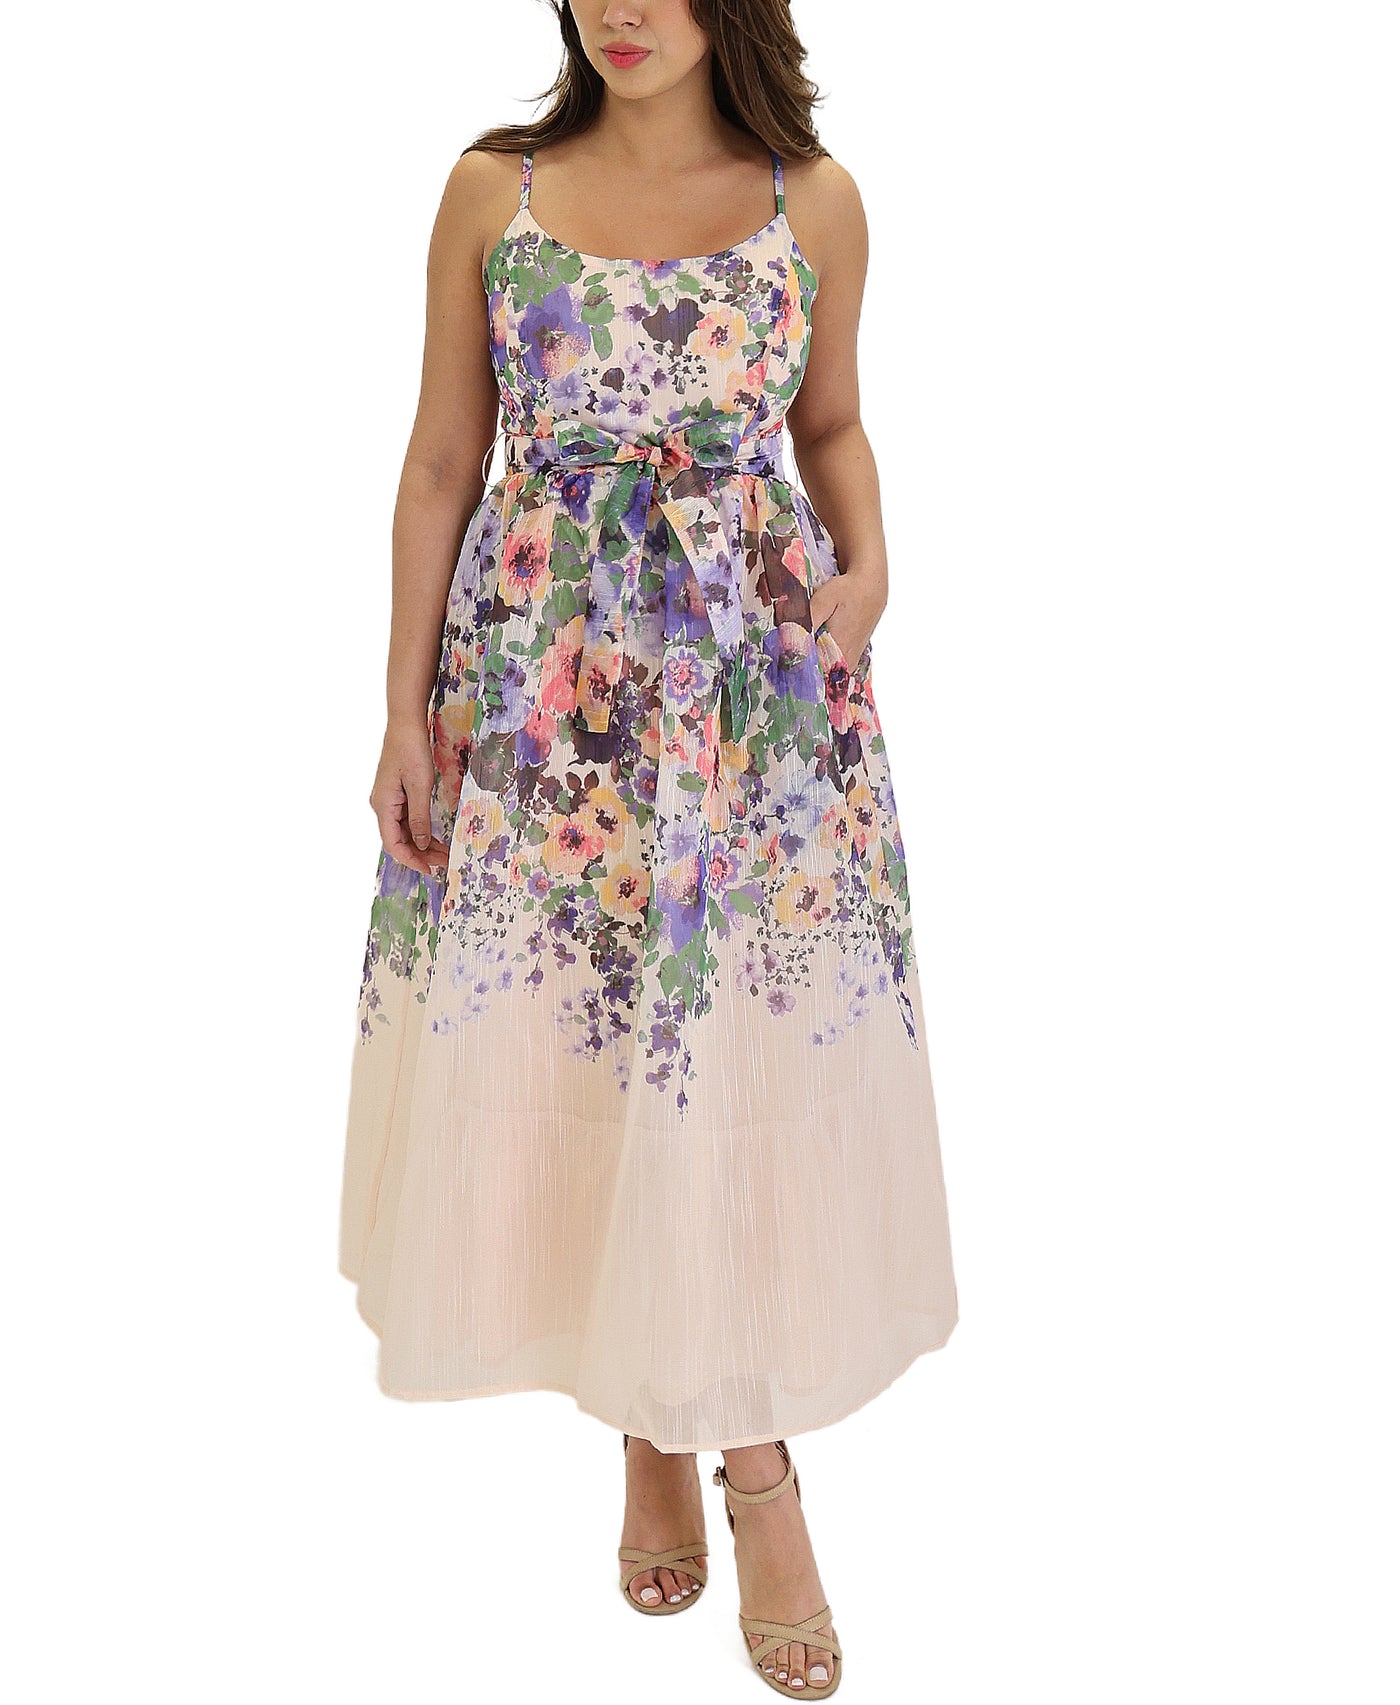 Floral Print Midi Dress image 1